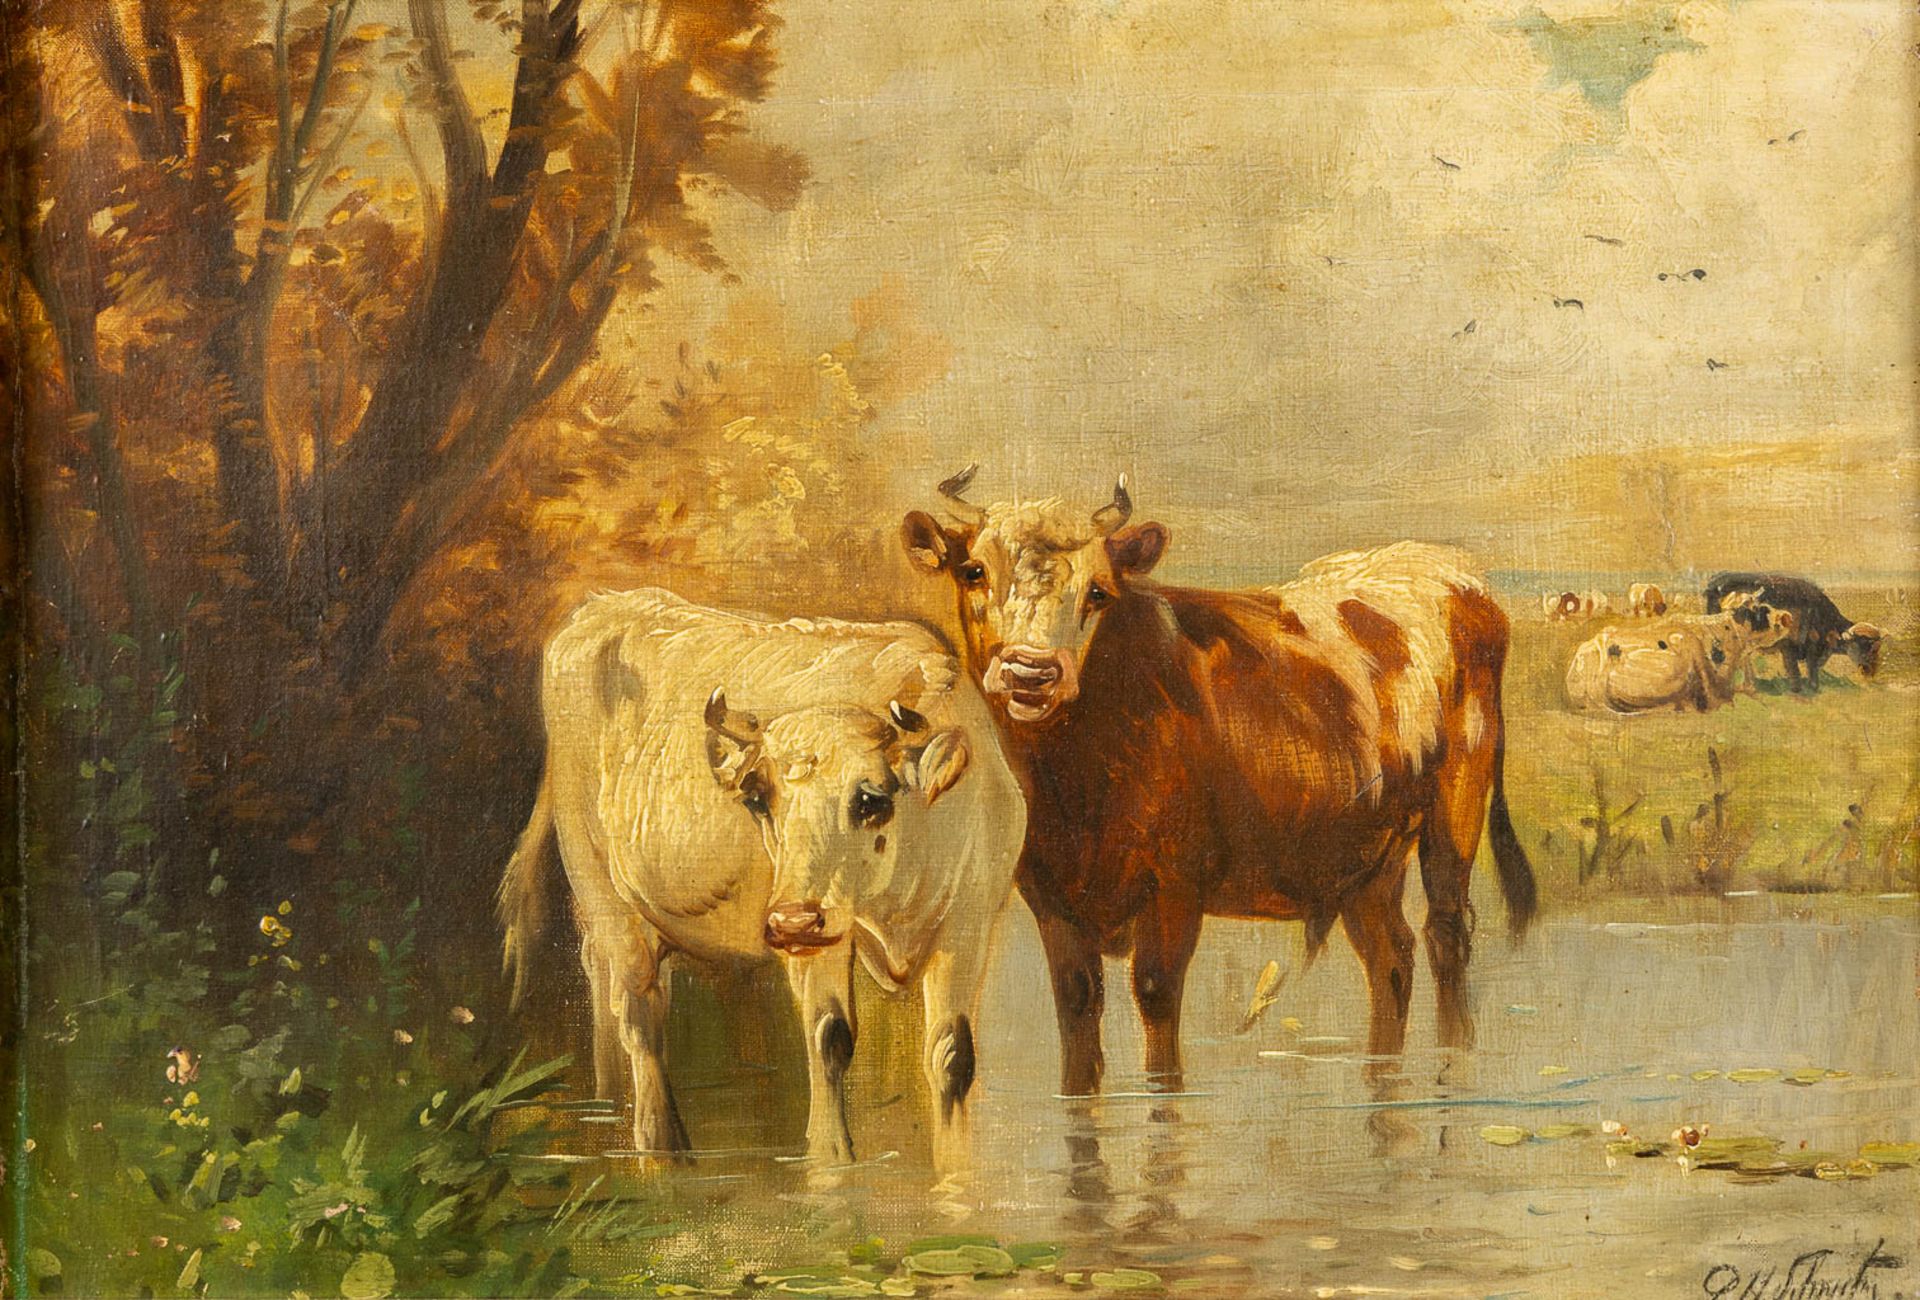 Paul SCHOUTEN (1860-1922) 'Cows in a pond' oil on canvas. (W:62 x H:45 cm)